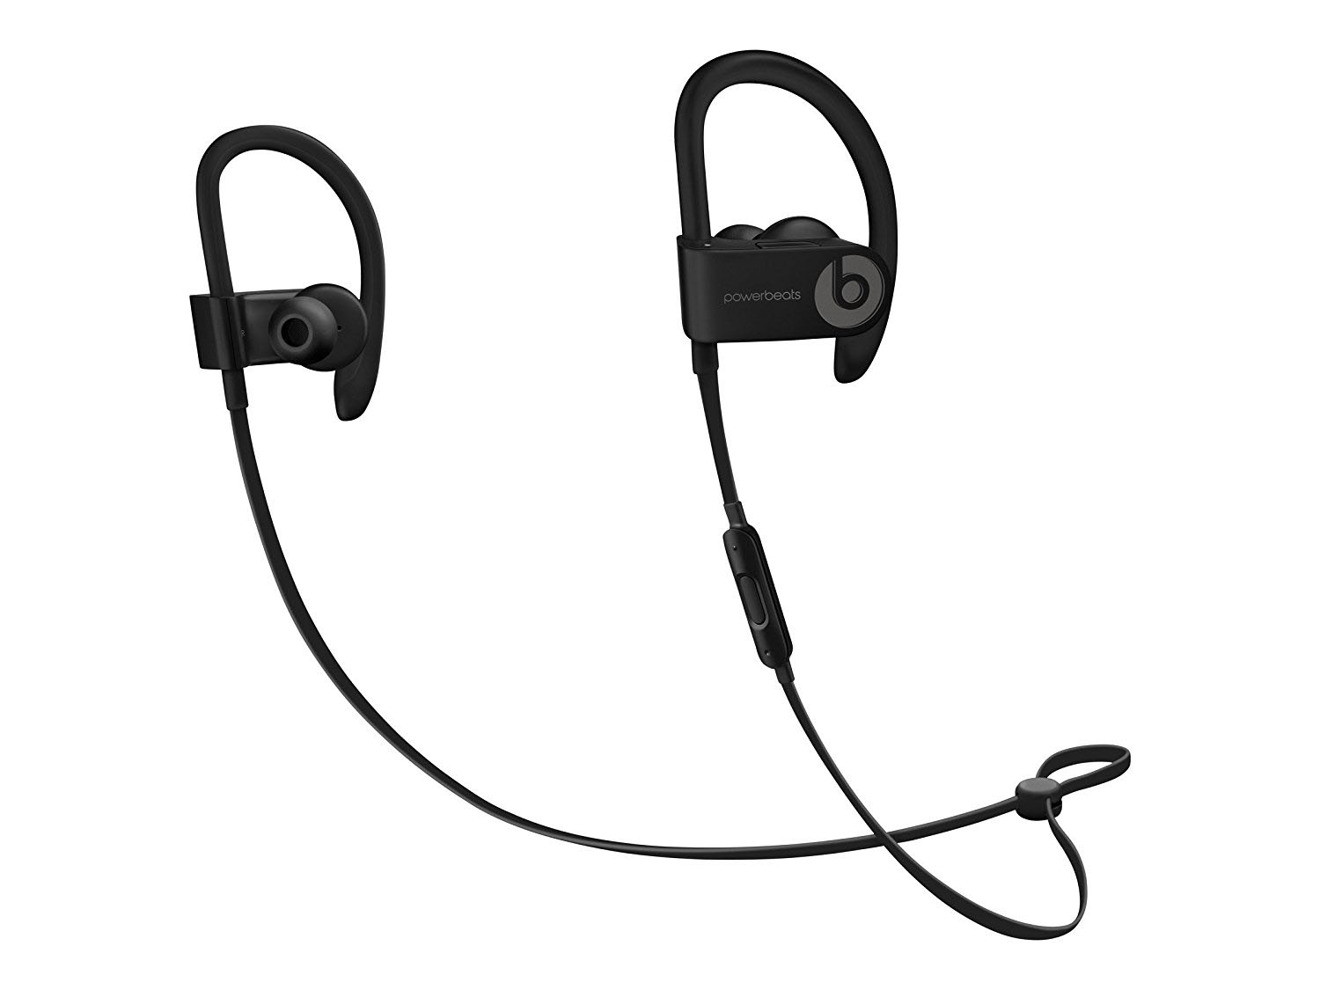 Powerbeats3 Wireless headphones